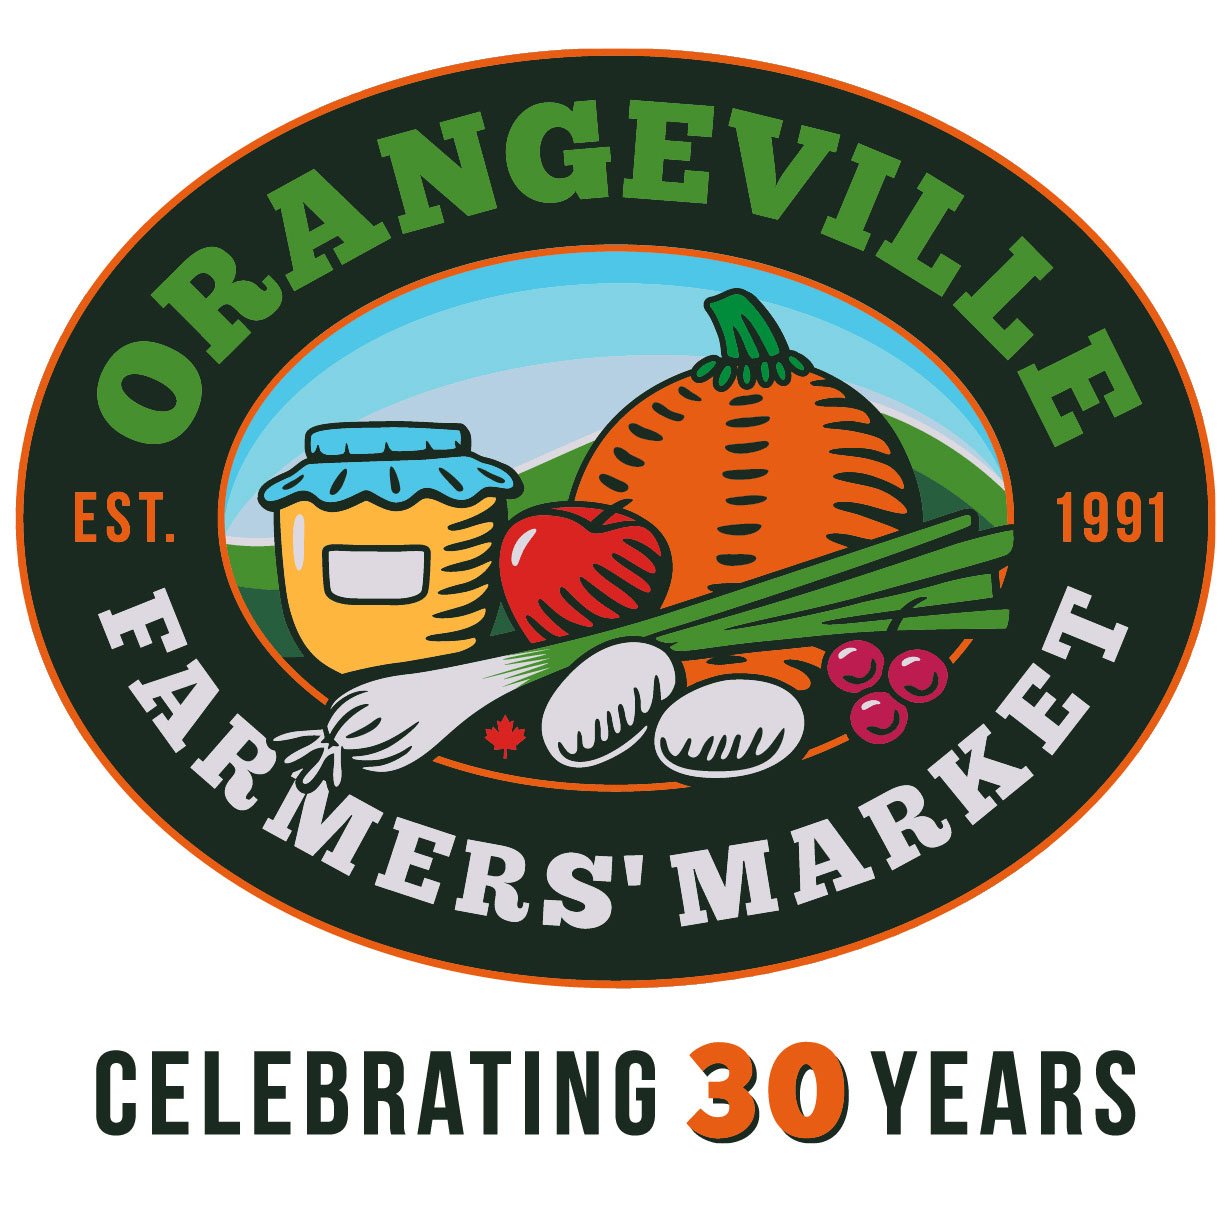 Orangeville Farmers' Market